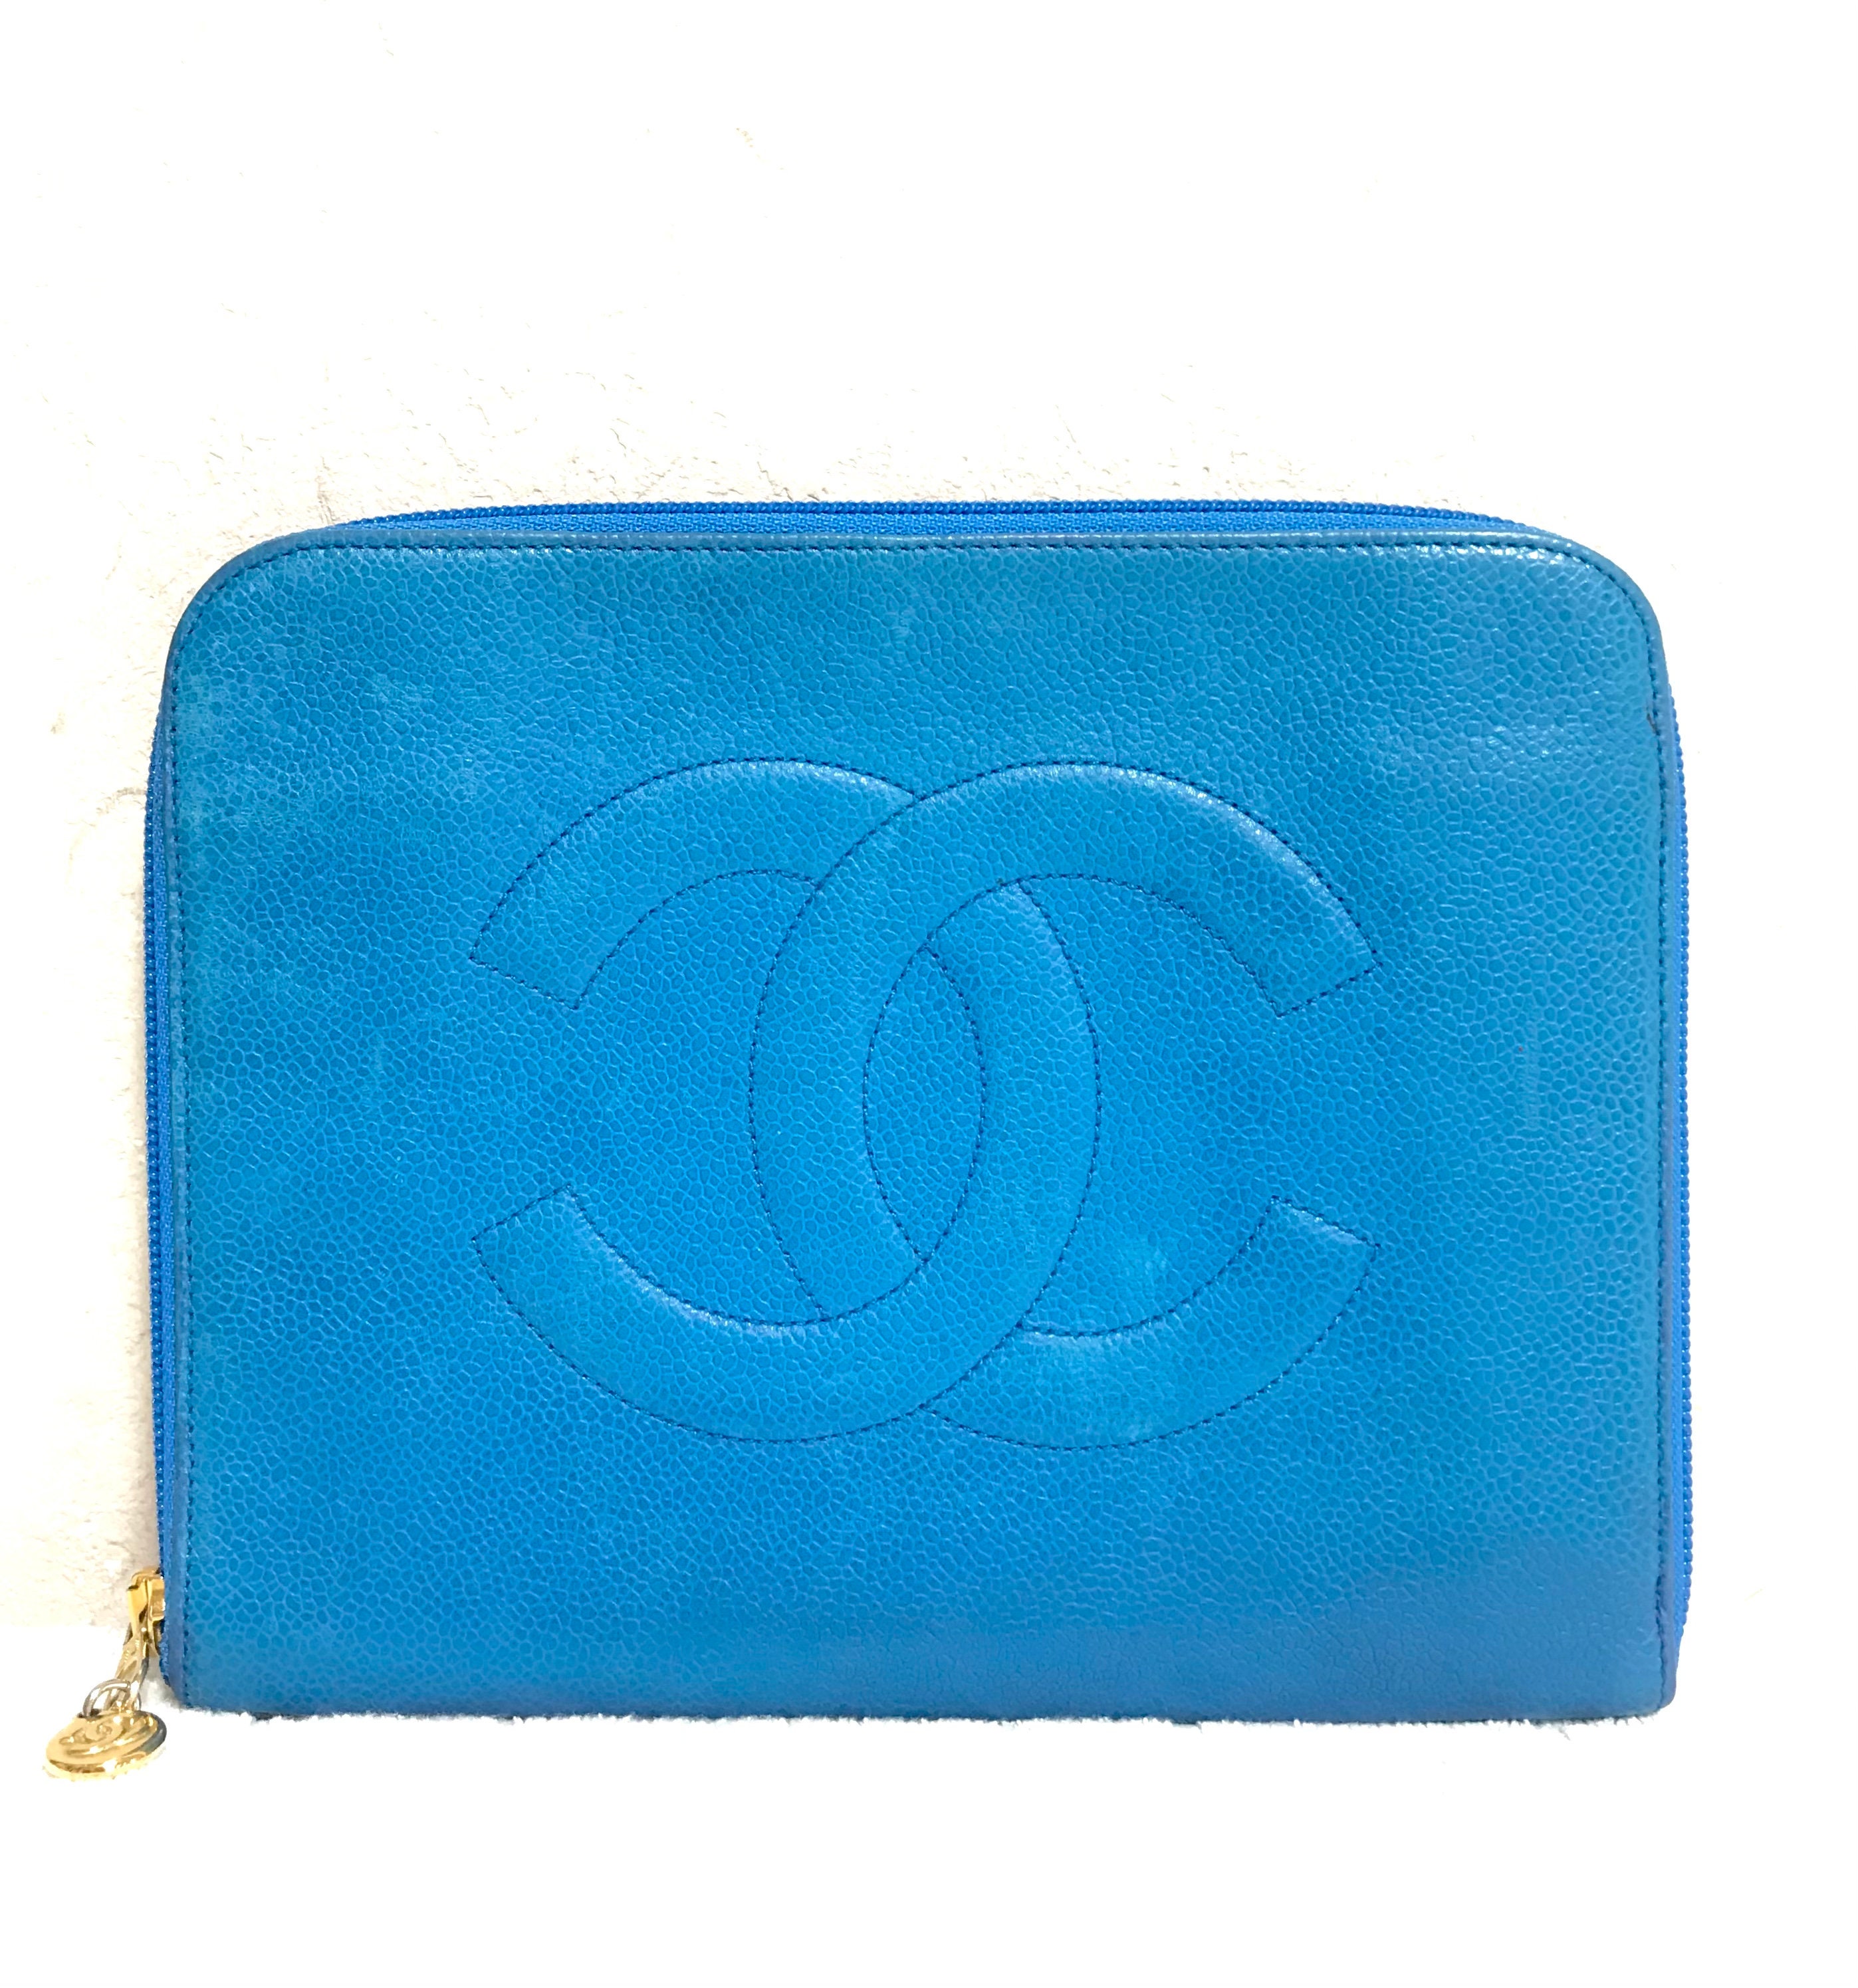 Vintage CHANEL Blue Caviar Clutch Bag iPhone Case Large -  Denmark